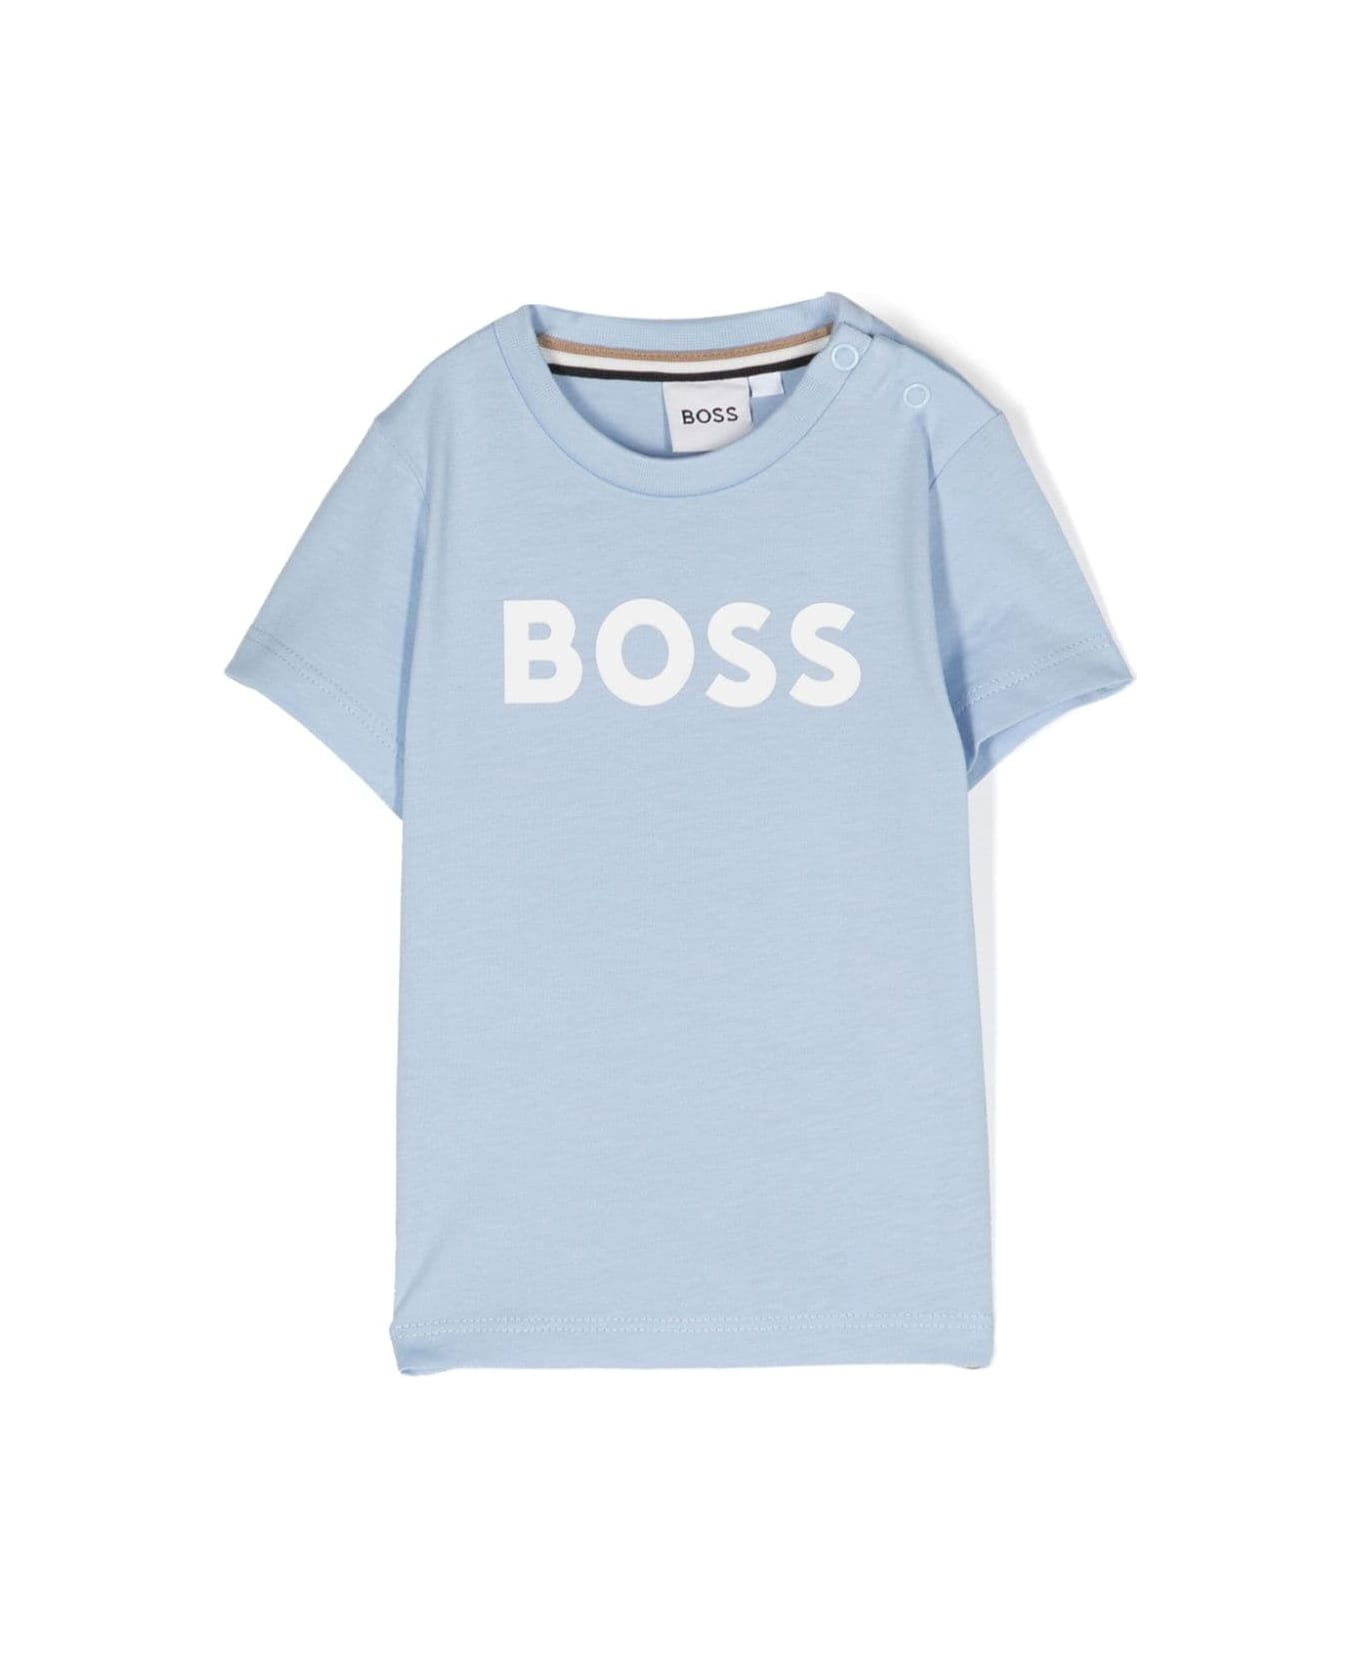 Hugo Boss T-shirt With Print - Light blue